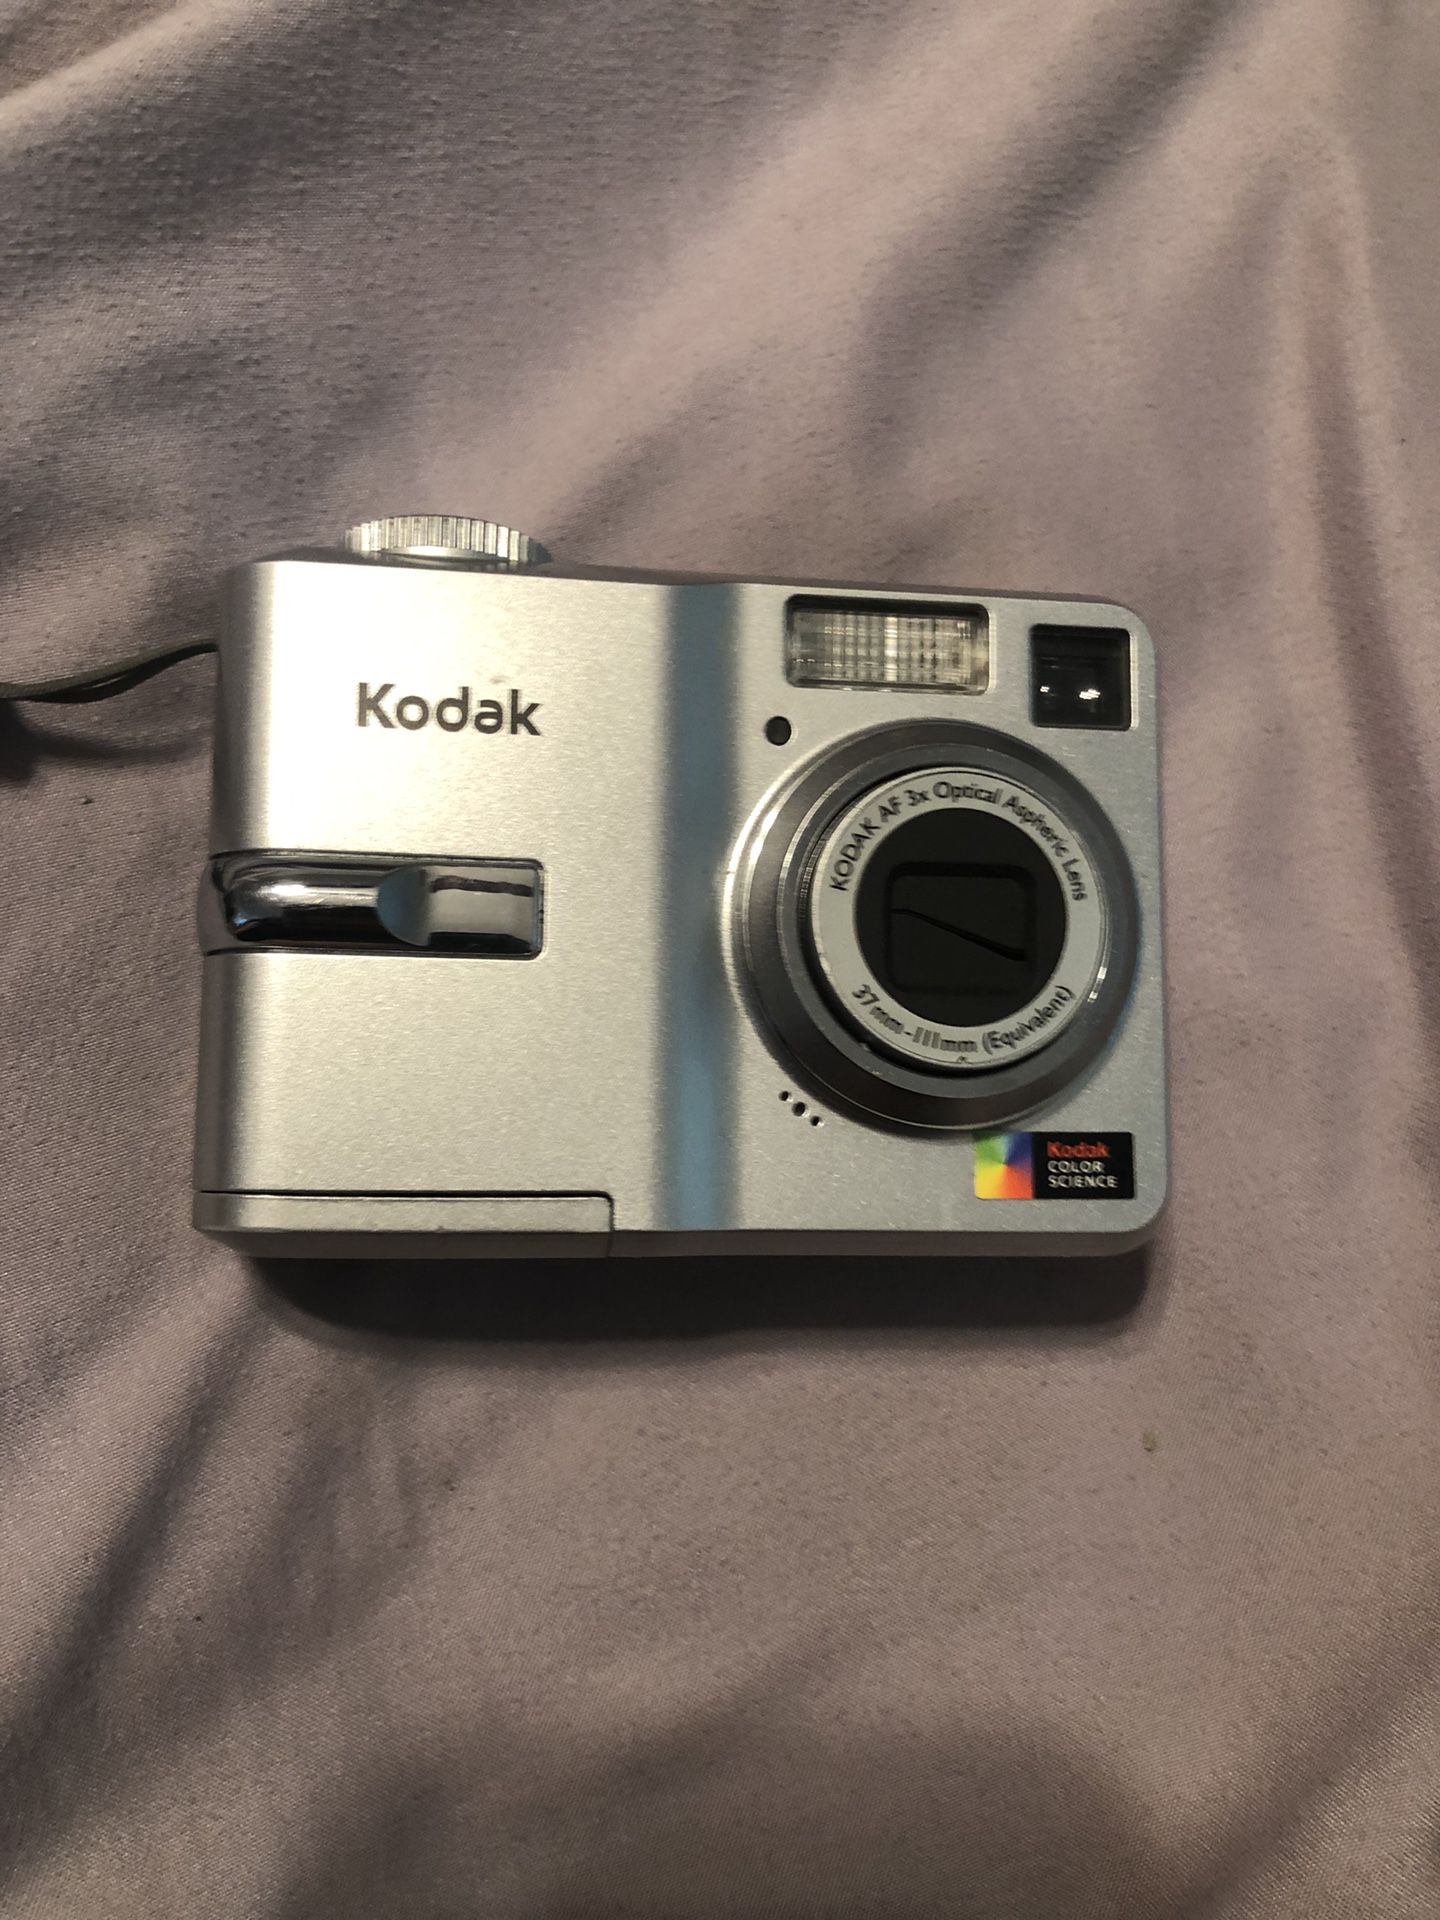 Kodak EasyShare C703 digital camera